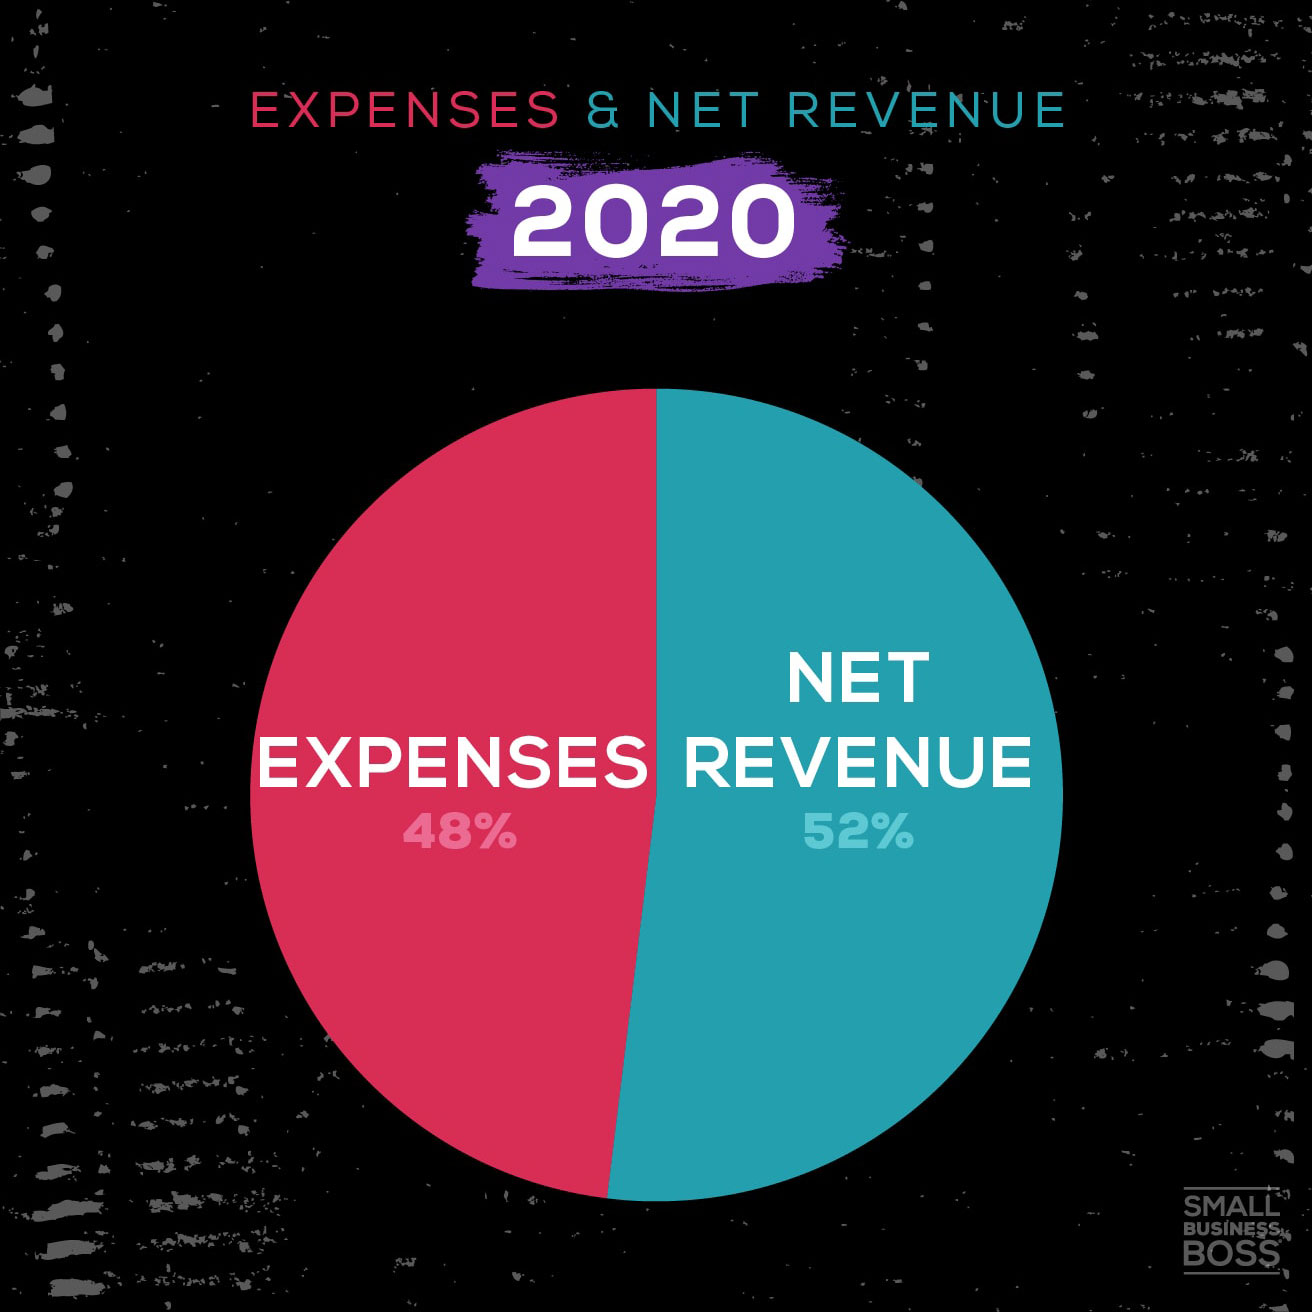 pie chart depicting expenses vs revenue in 2020